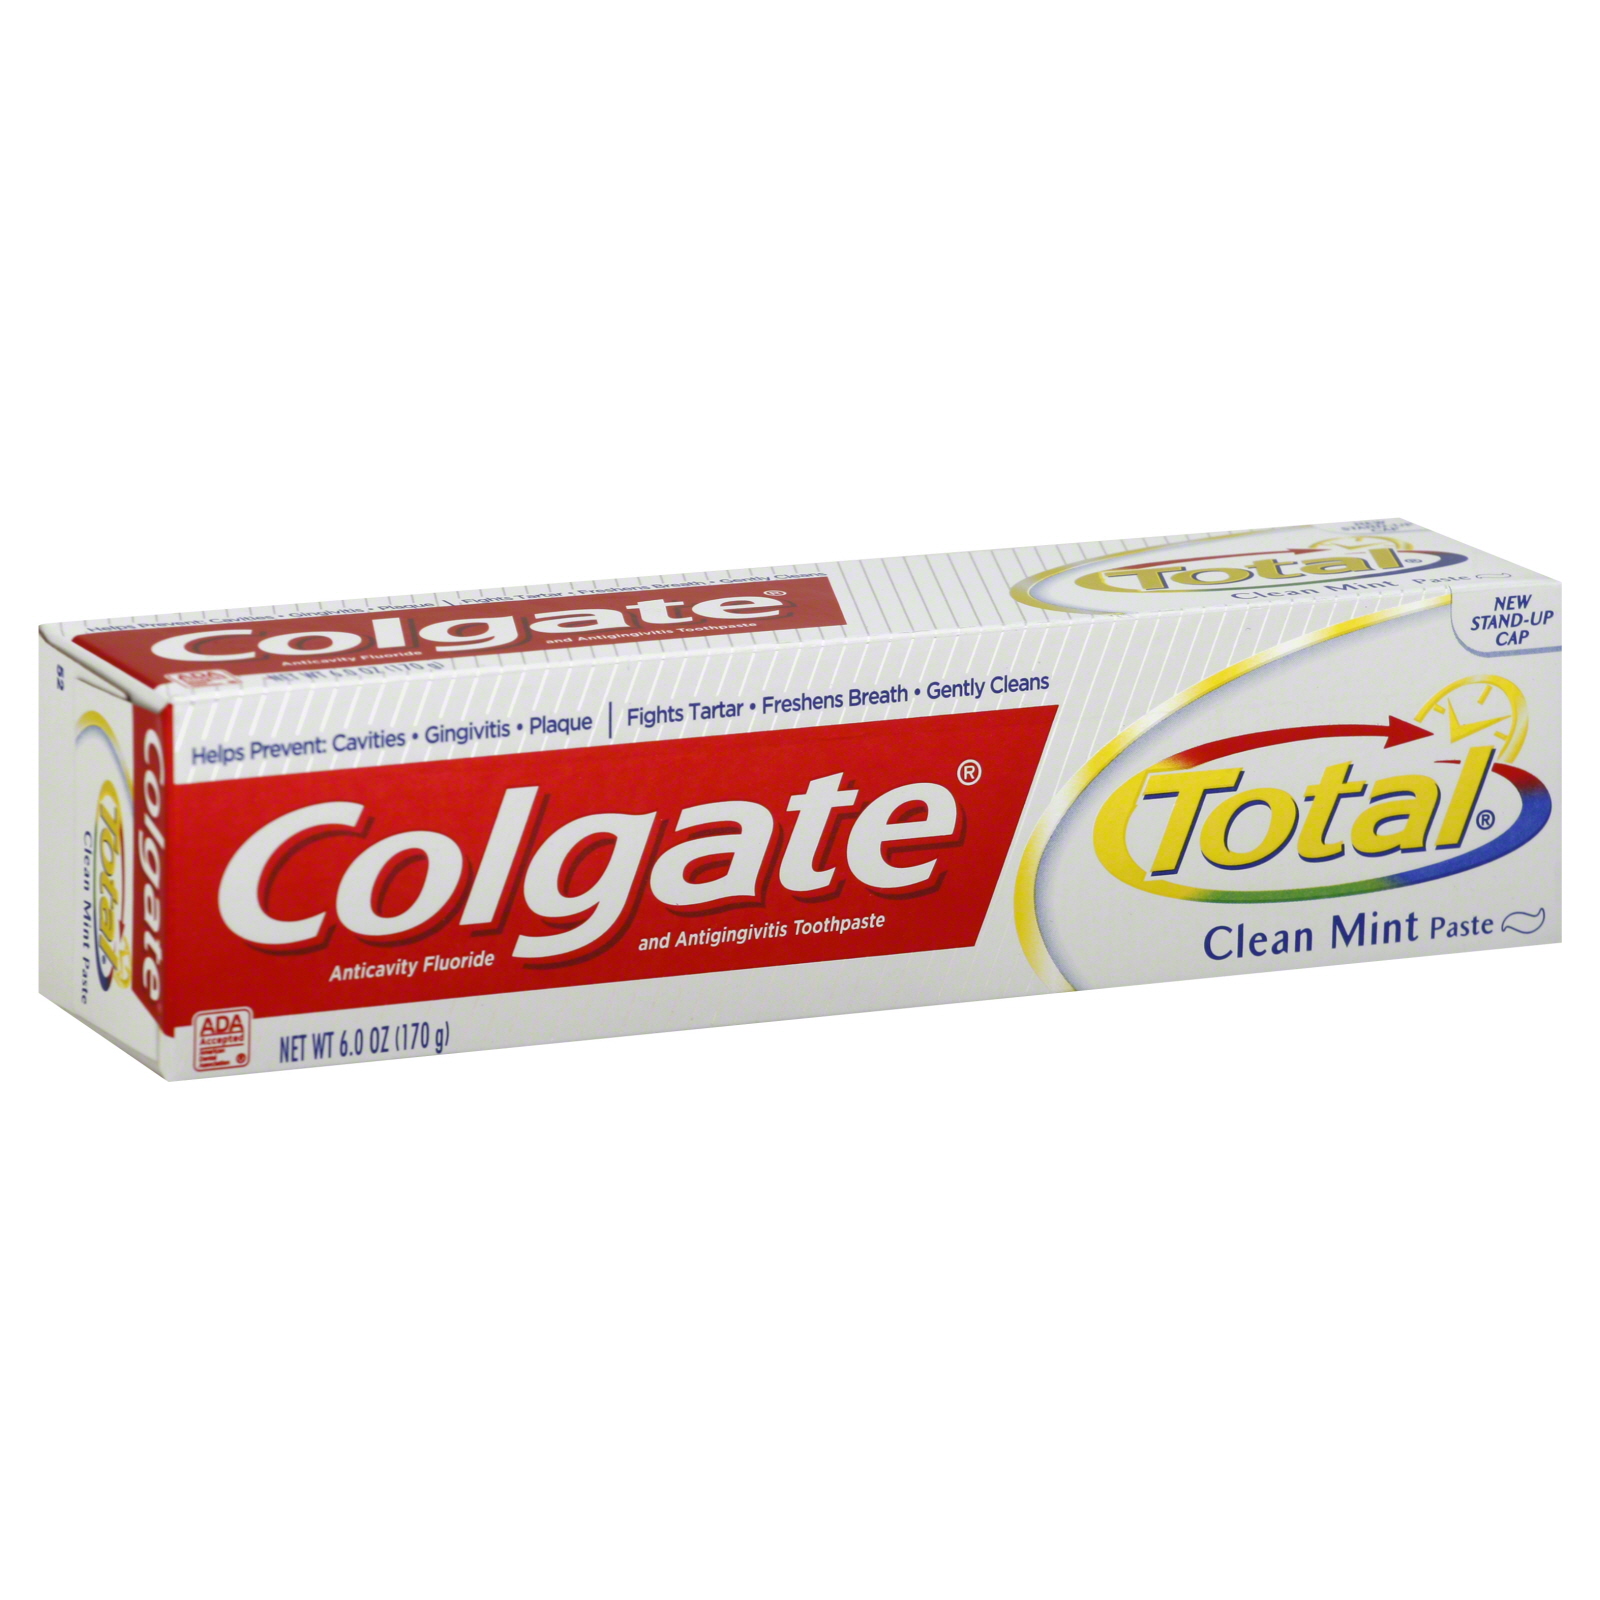 Colgate TotalToothpaste, Anticavity Fluoride and Antigingivitis, Clean Mint, Paste, 6 oz (170 g)